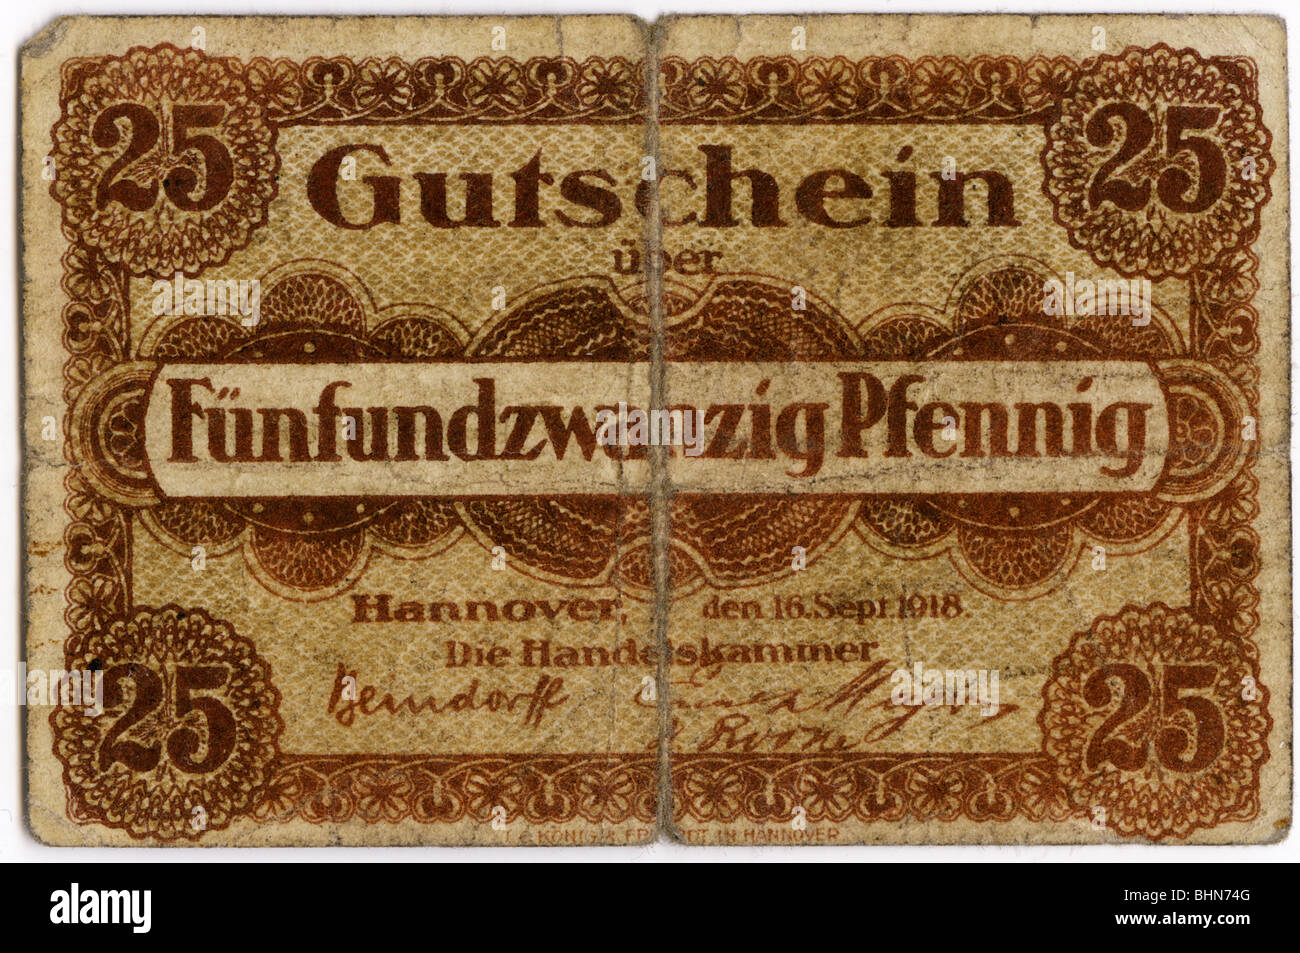 money / finance, banknotes, Germany, 25 Pfennig, necessity money, token of  Hanover Chamber of Commerce, 16.9.1918 Stock Photo - Alamy